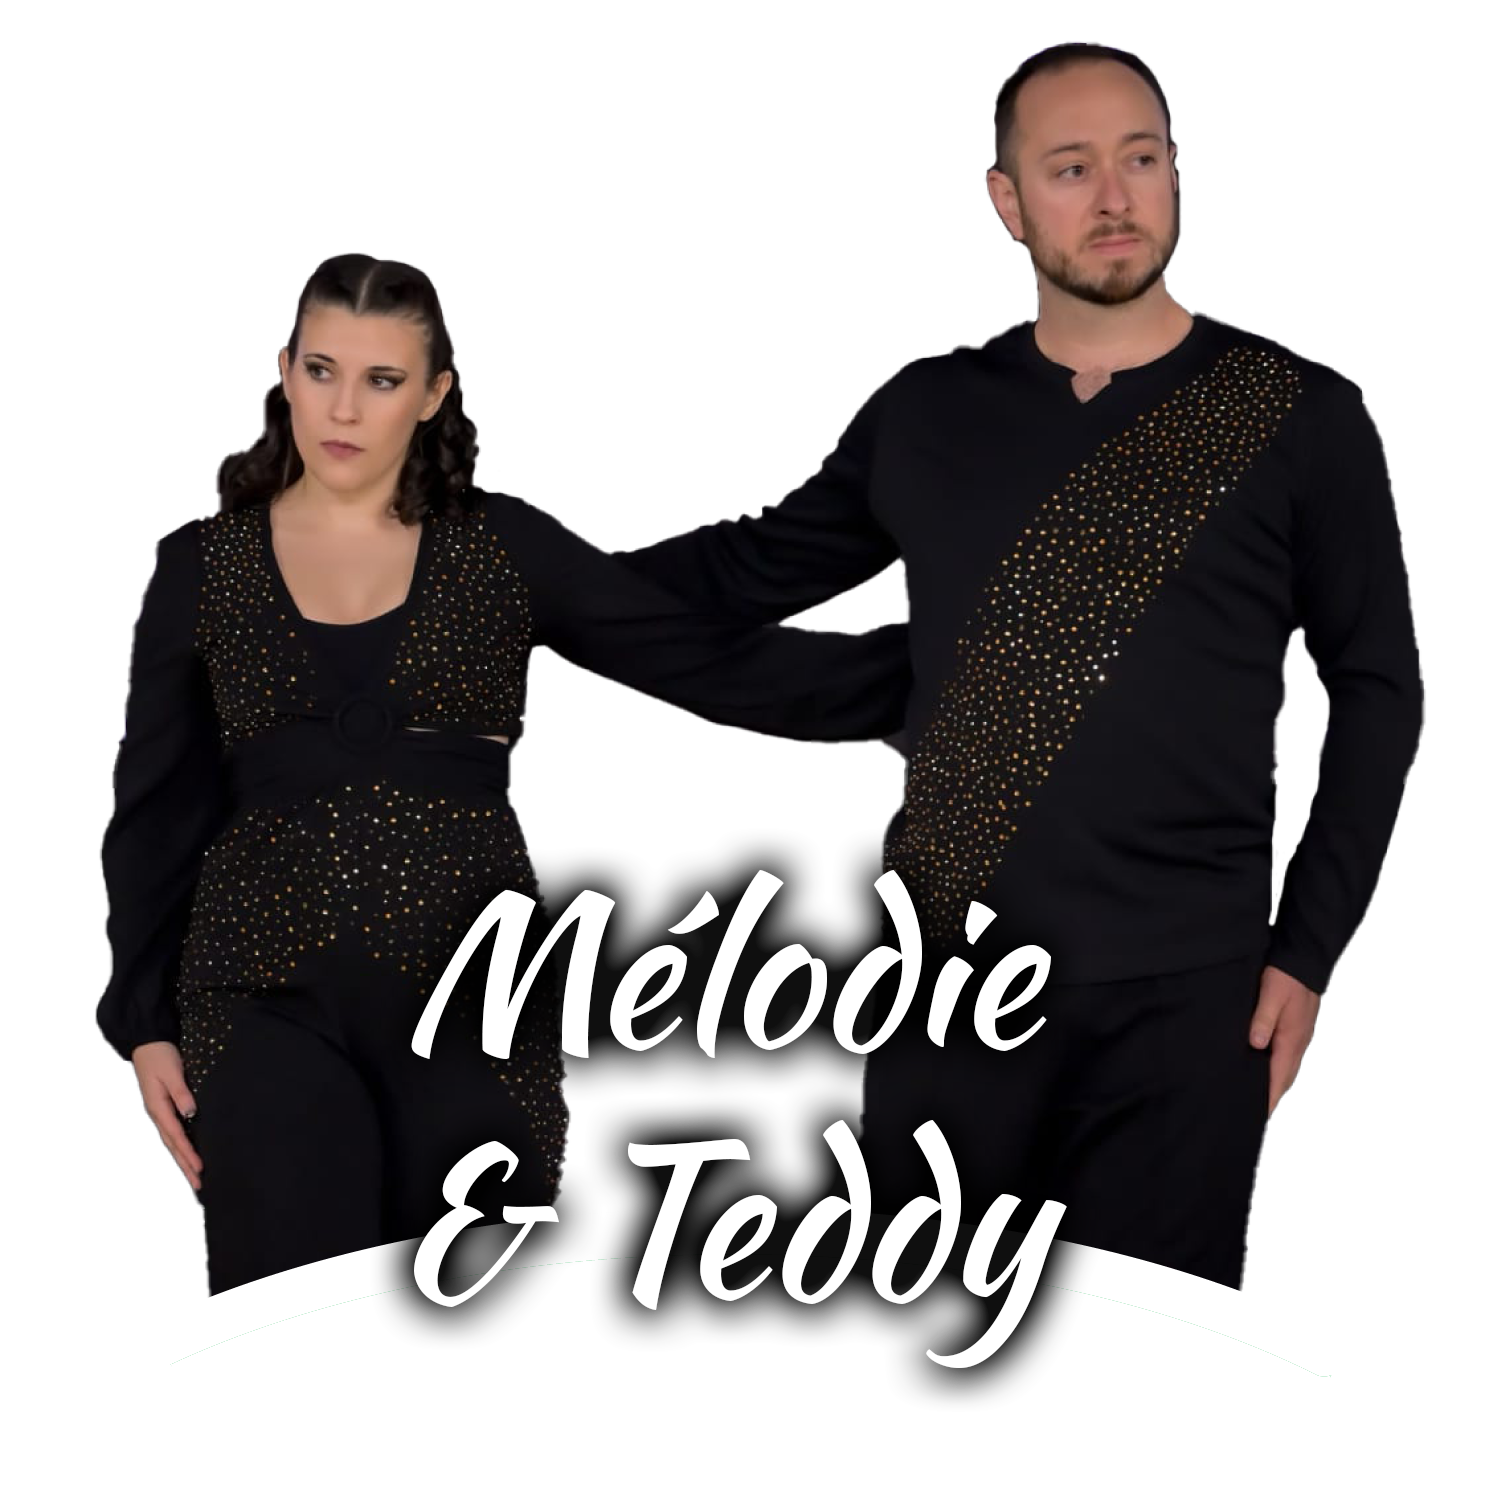 Melodie_Teddy_name